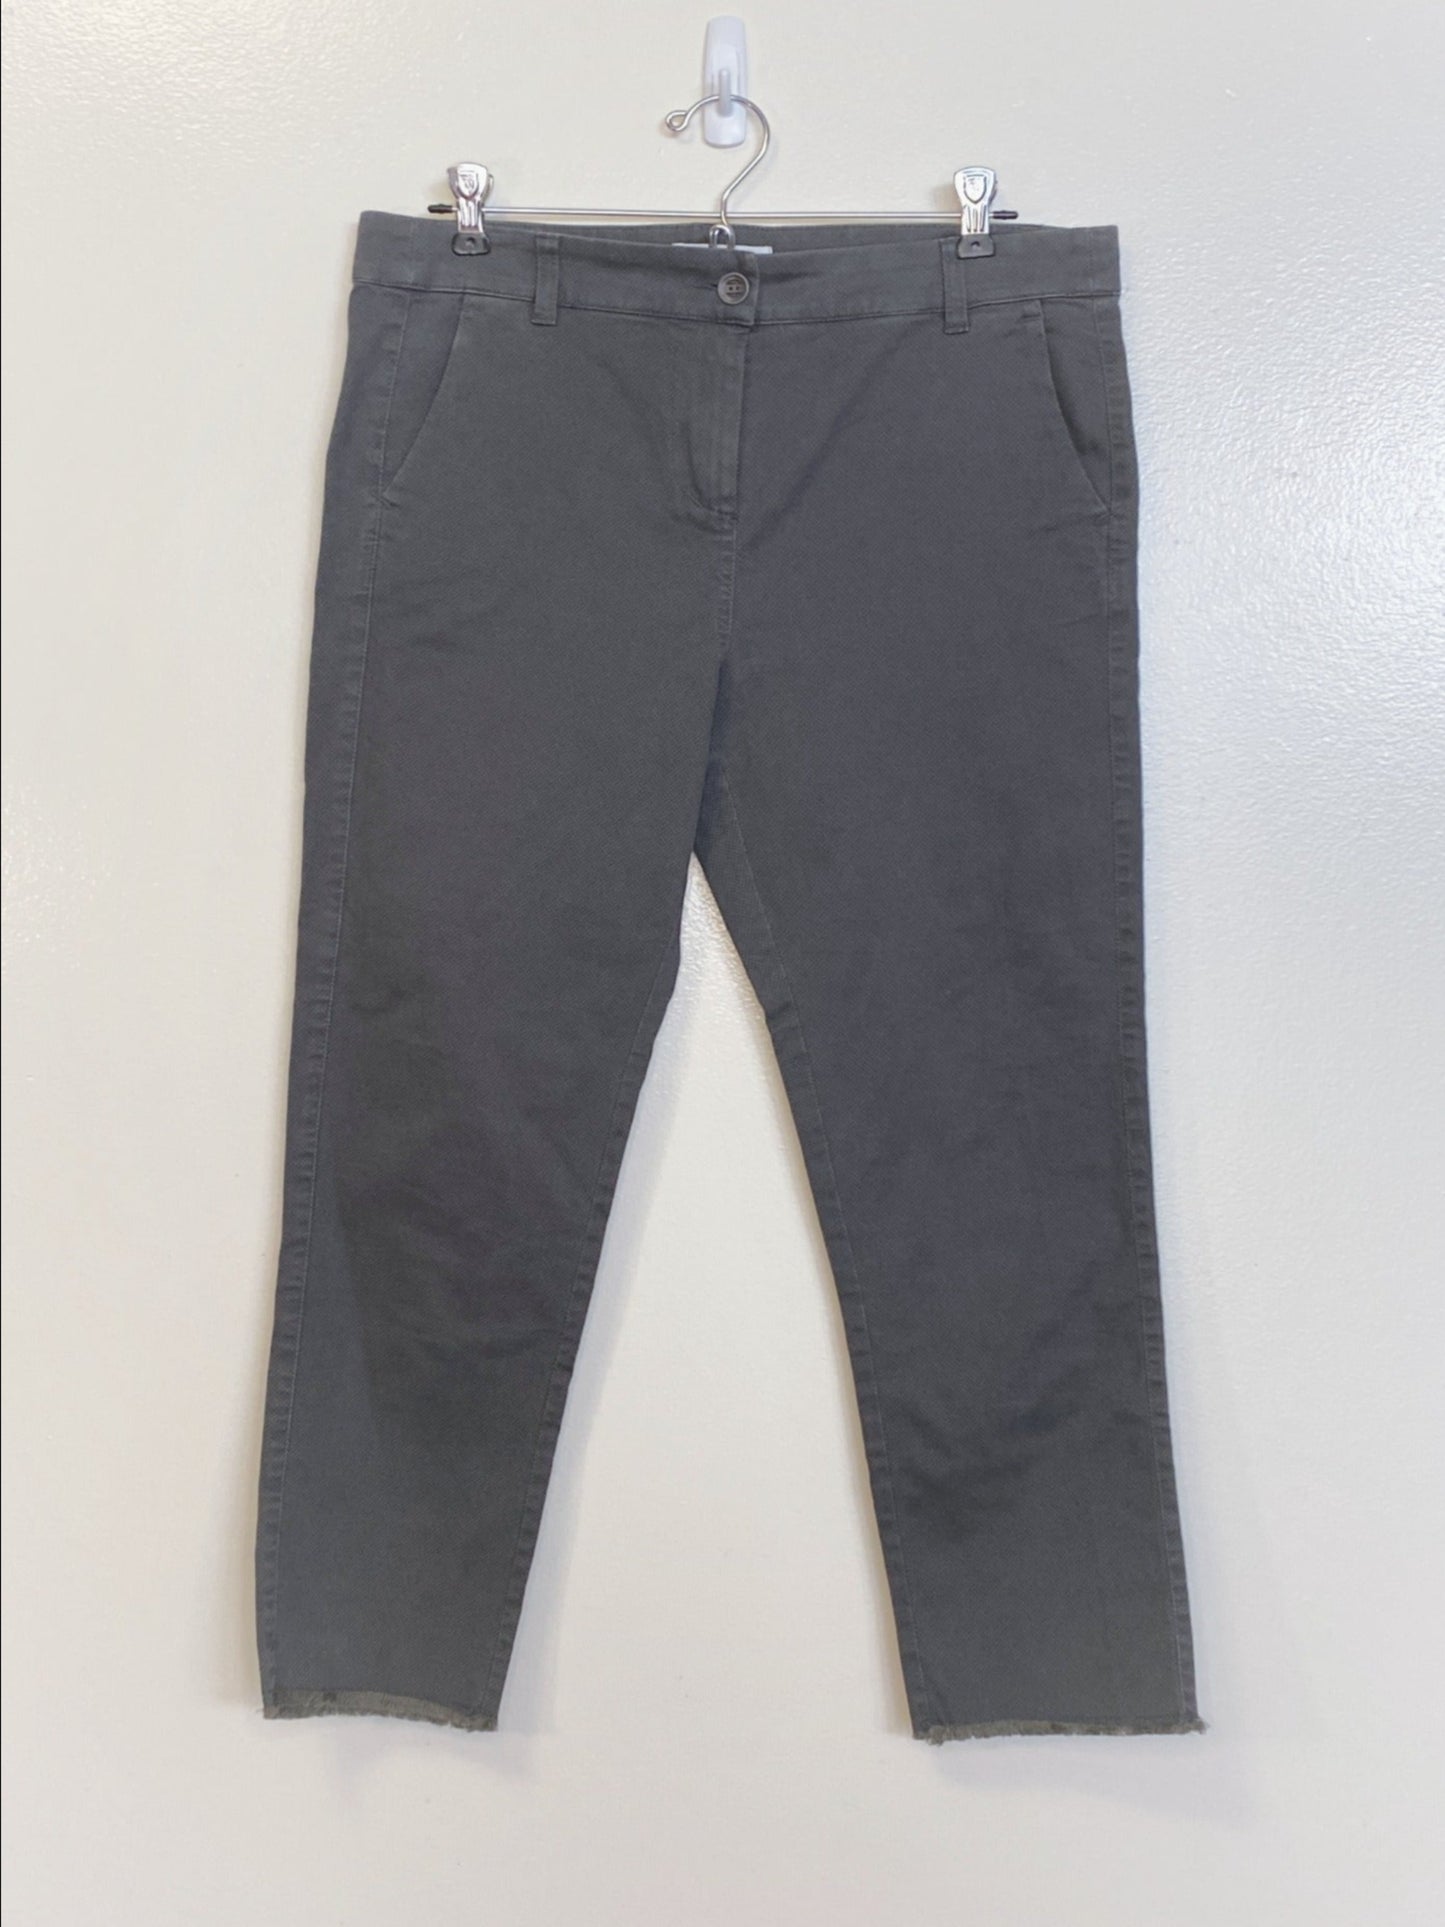 Patterned Jeans (Medium)